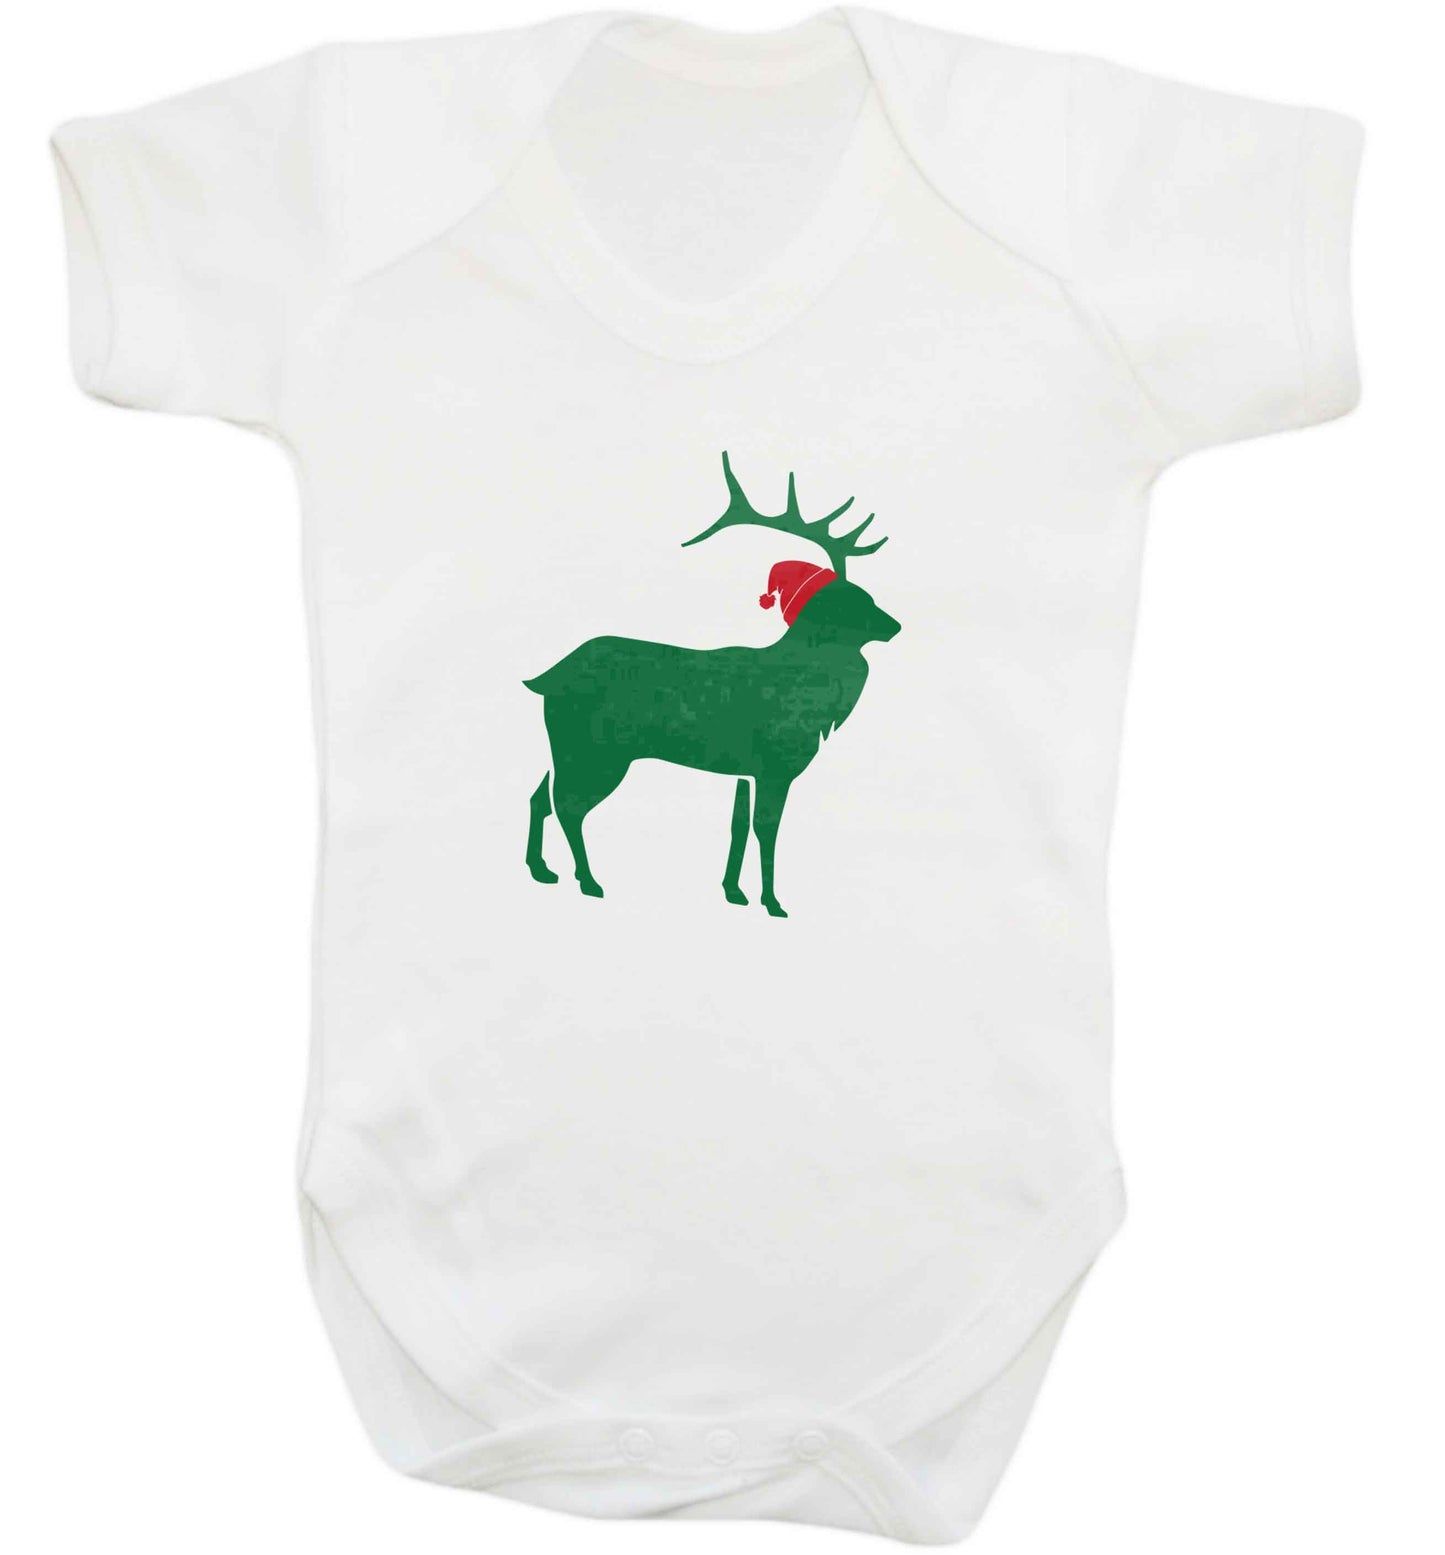 Green stag Santa baby vest white 18-24 months